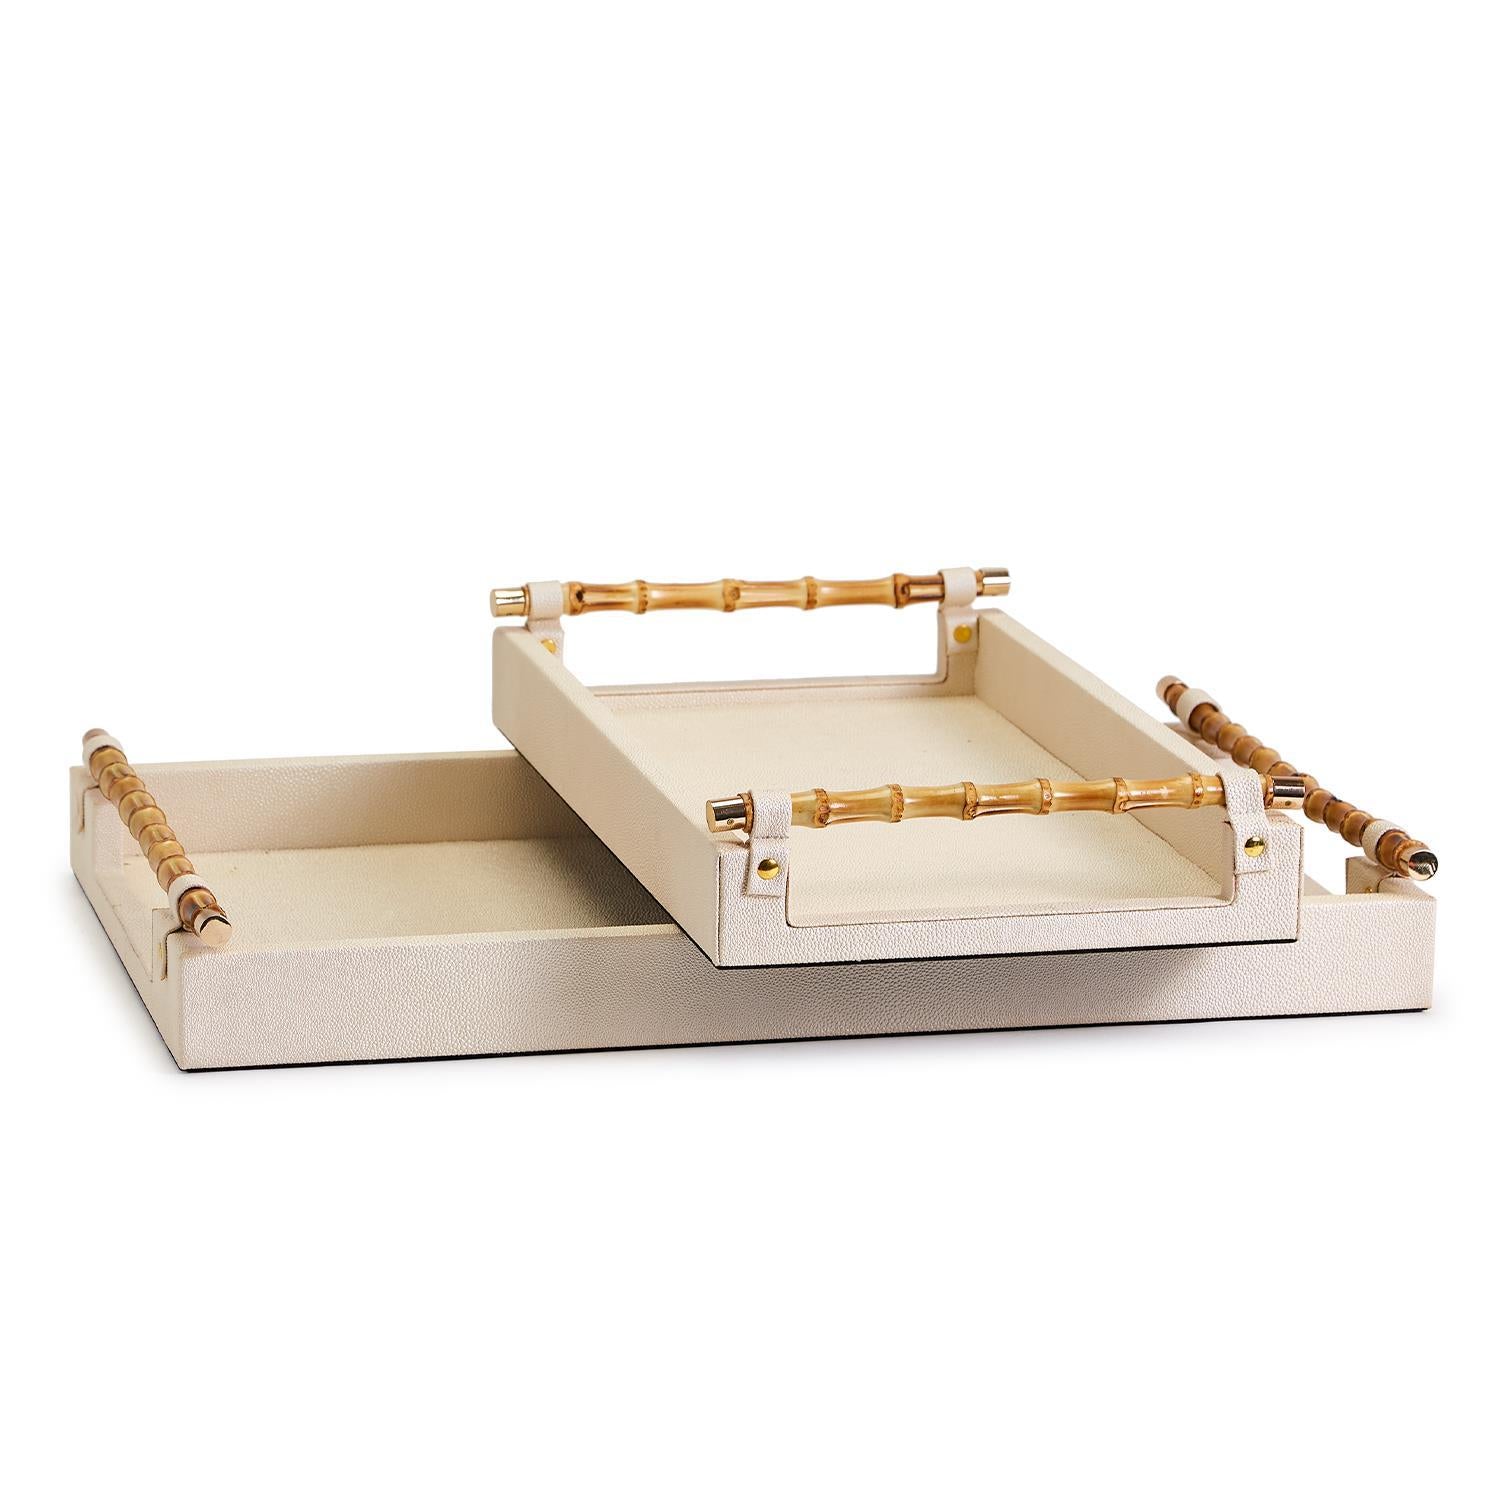 Two's Company S/2 Cream Decorative Rectangle Trays W Bamboo Handles